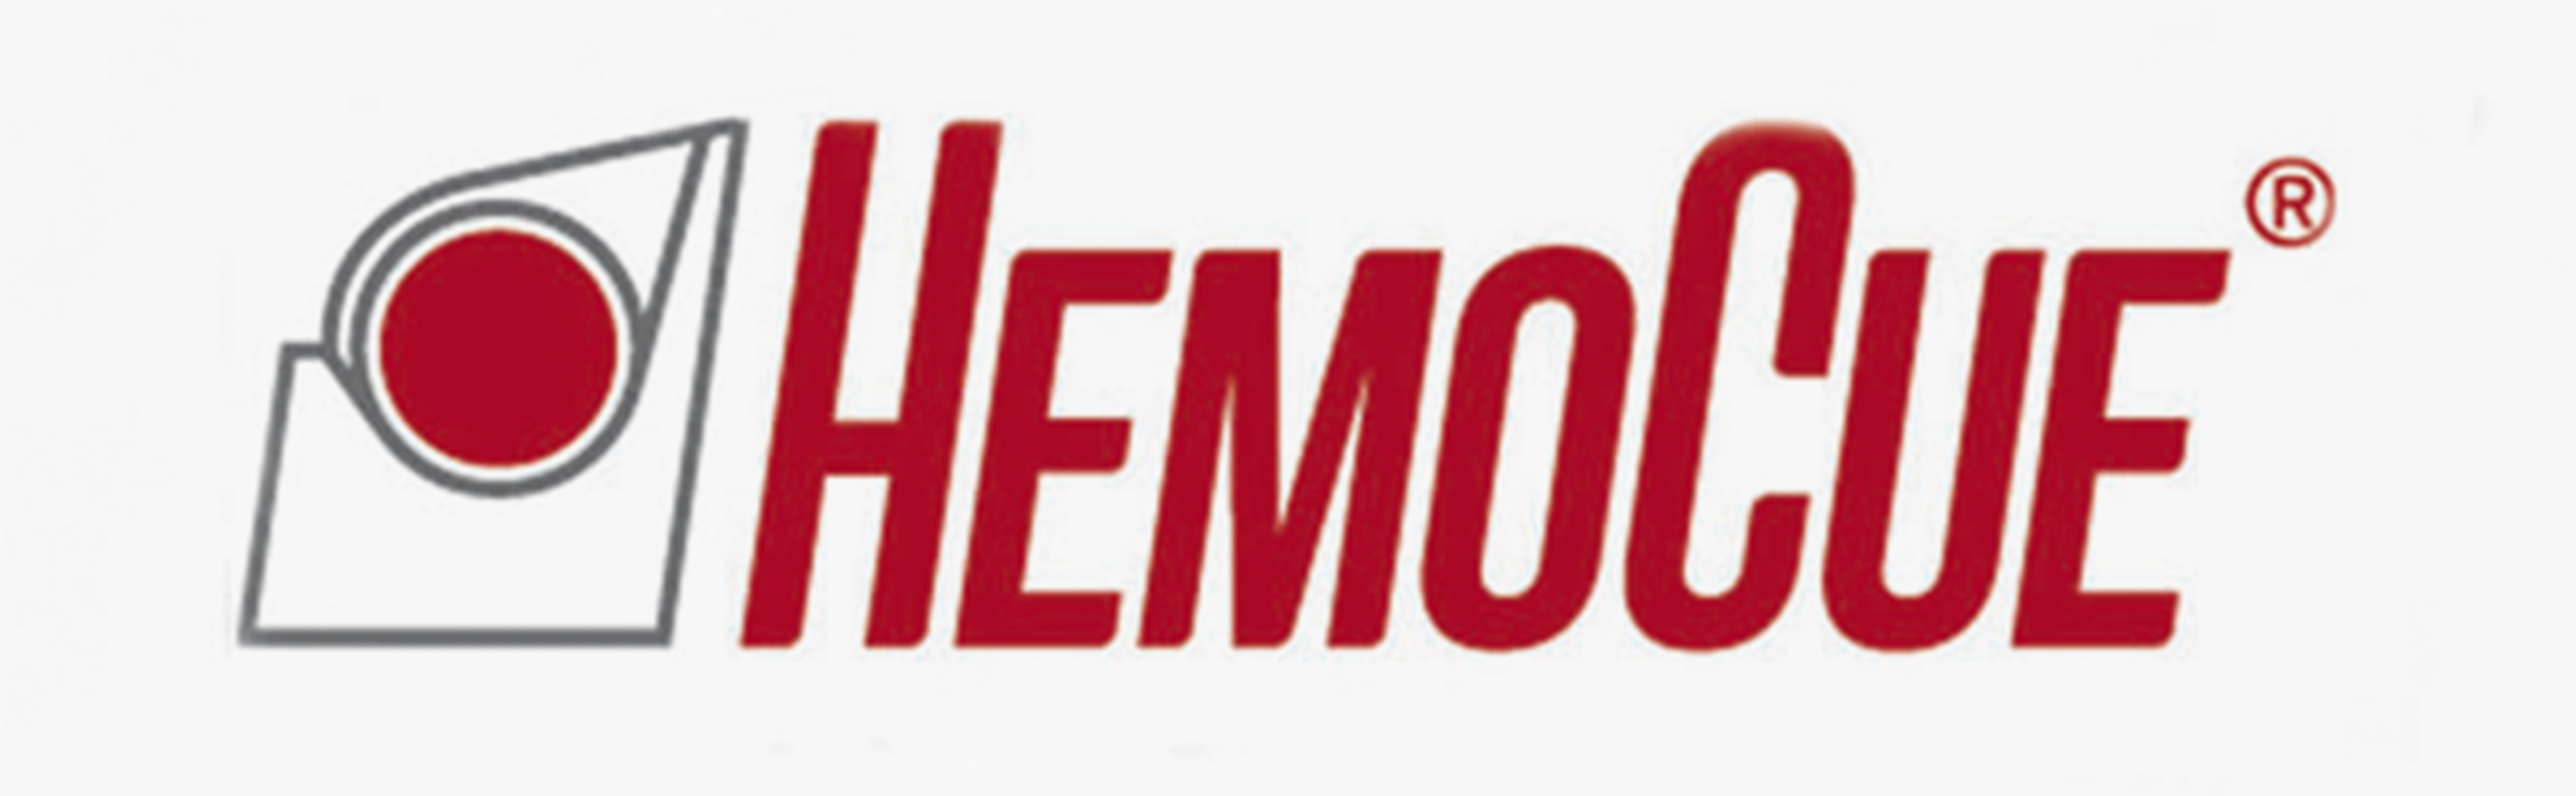 HemoCue America